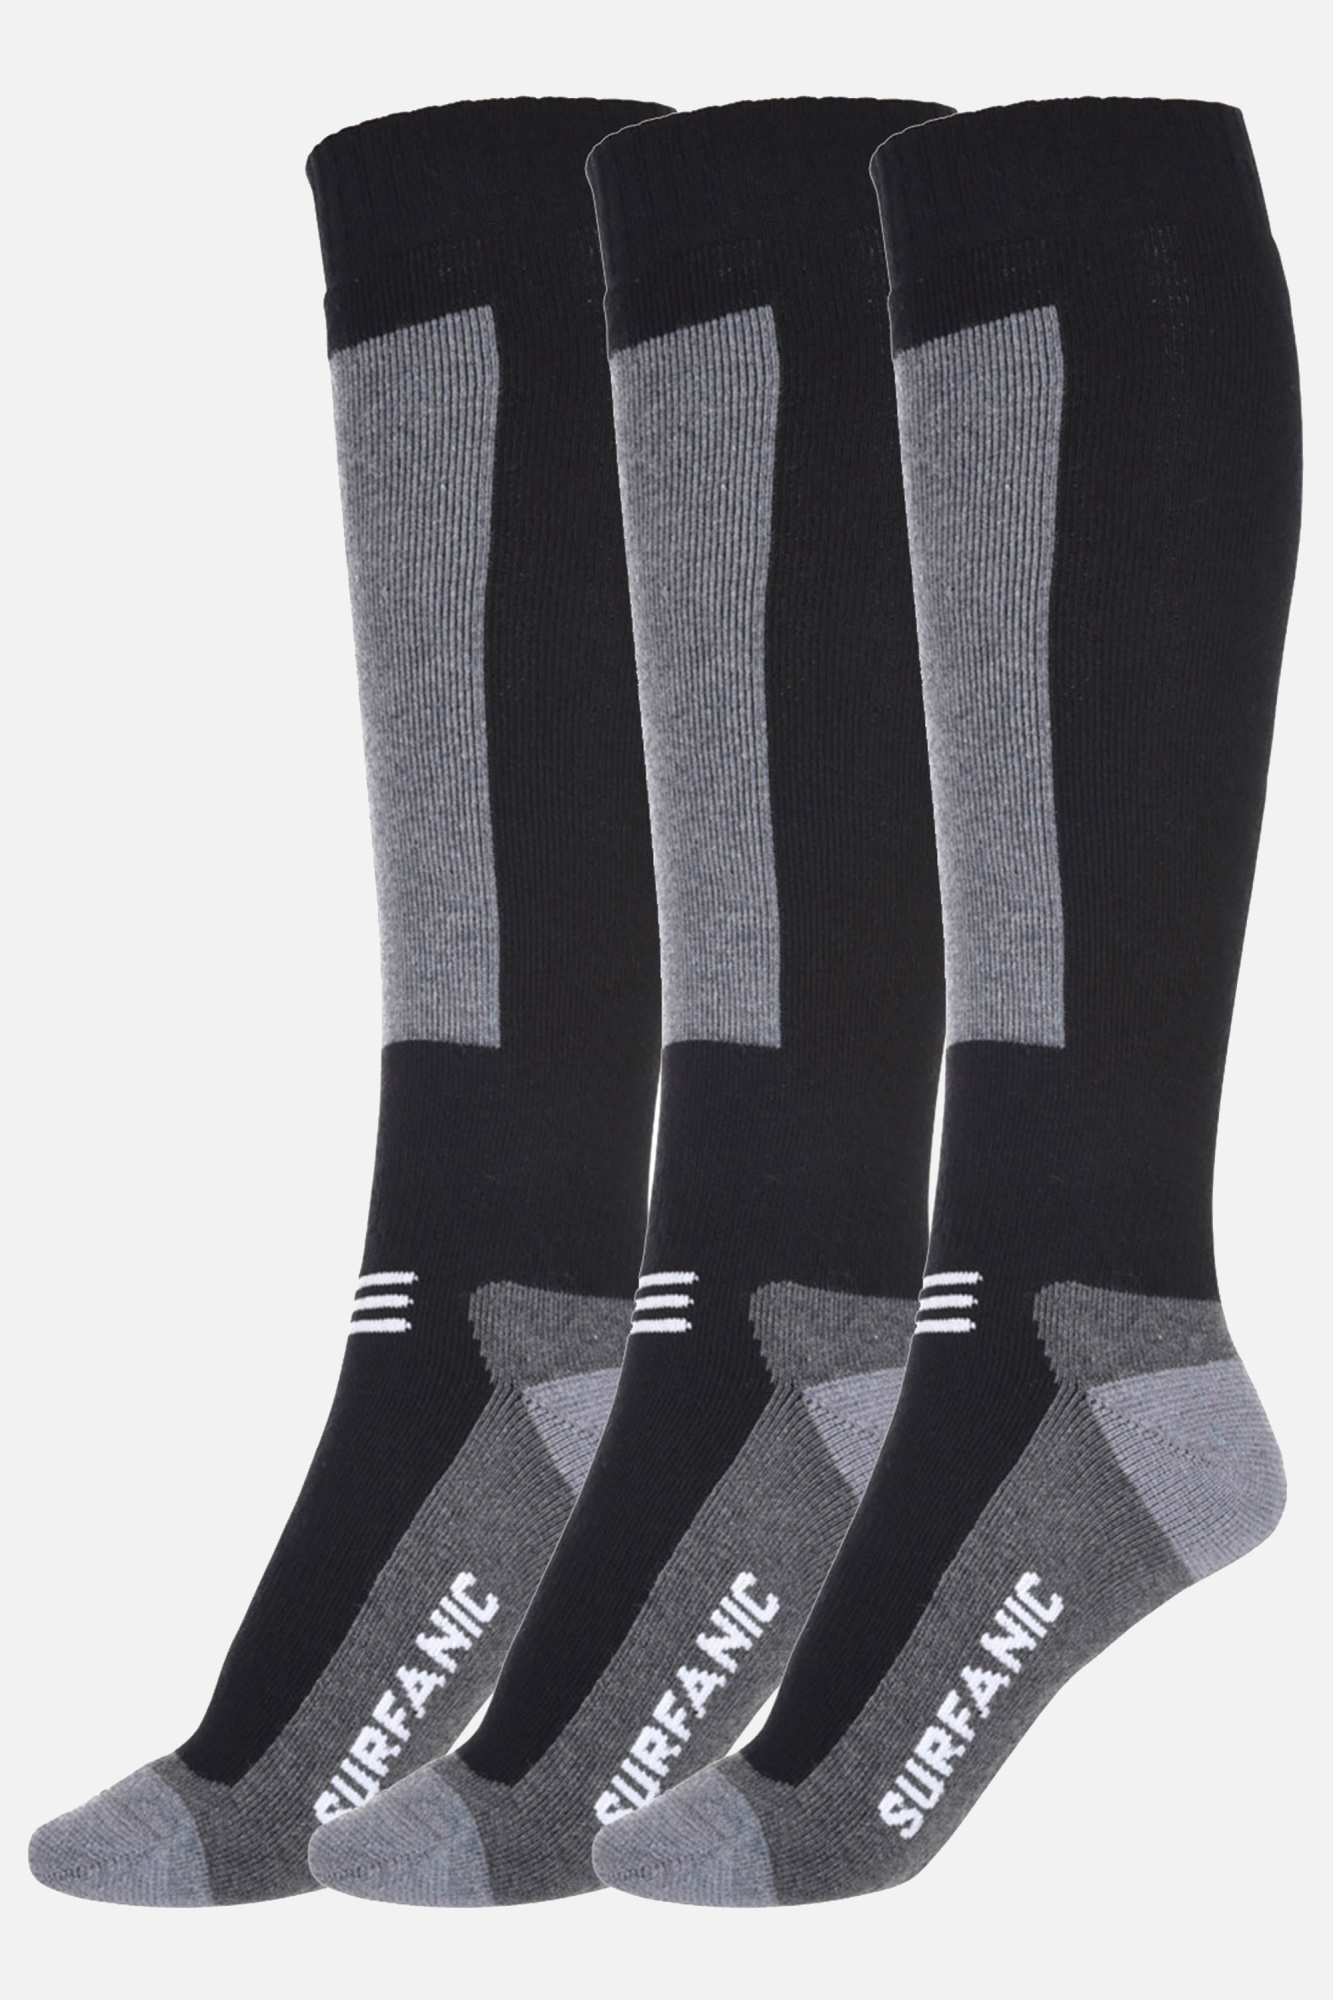 Surfanic Mens Endurance Merino 3 Pack Sock Black - Size: 4-7